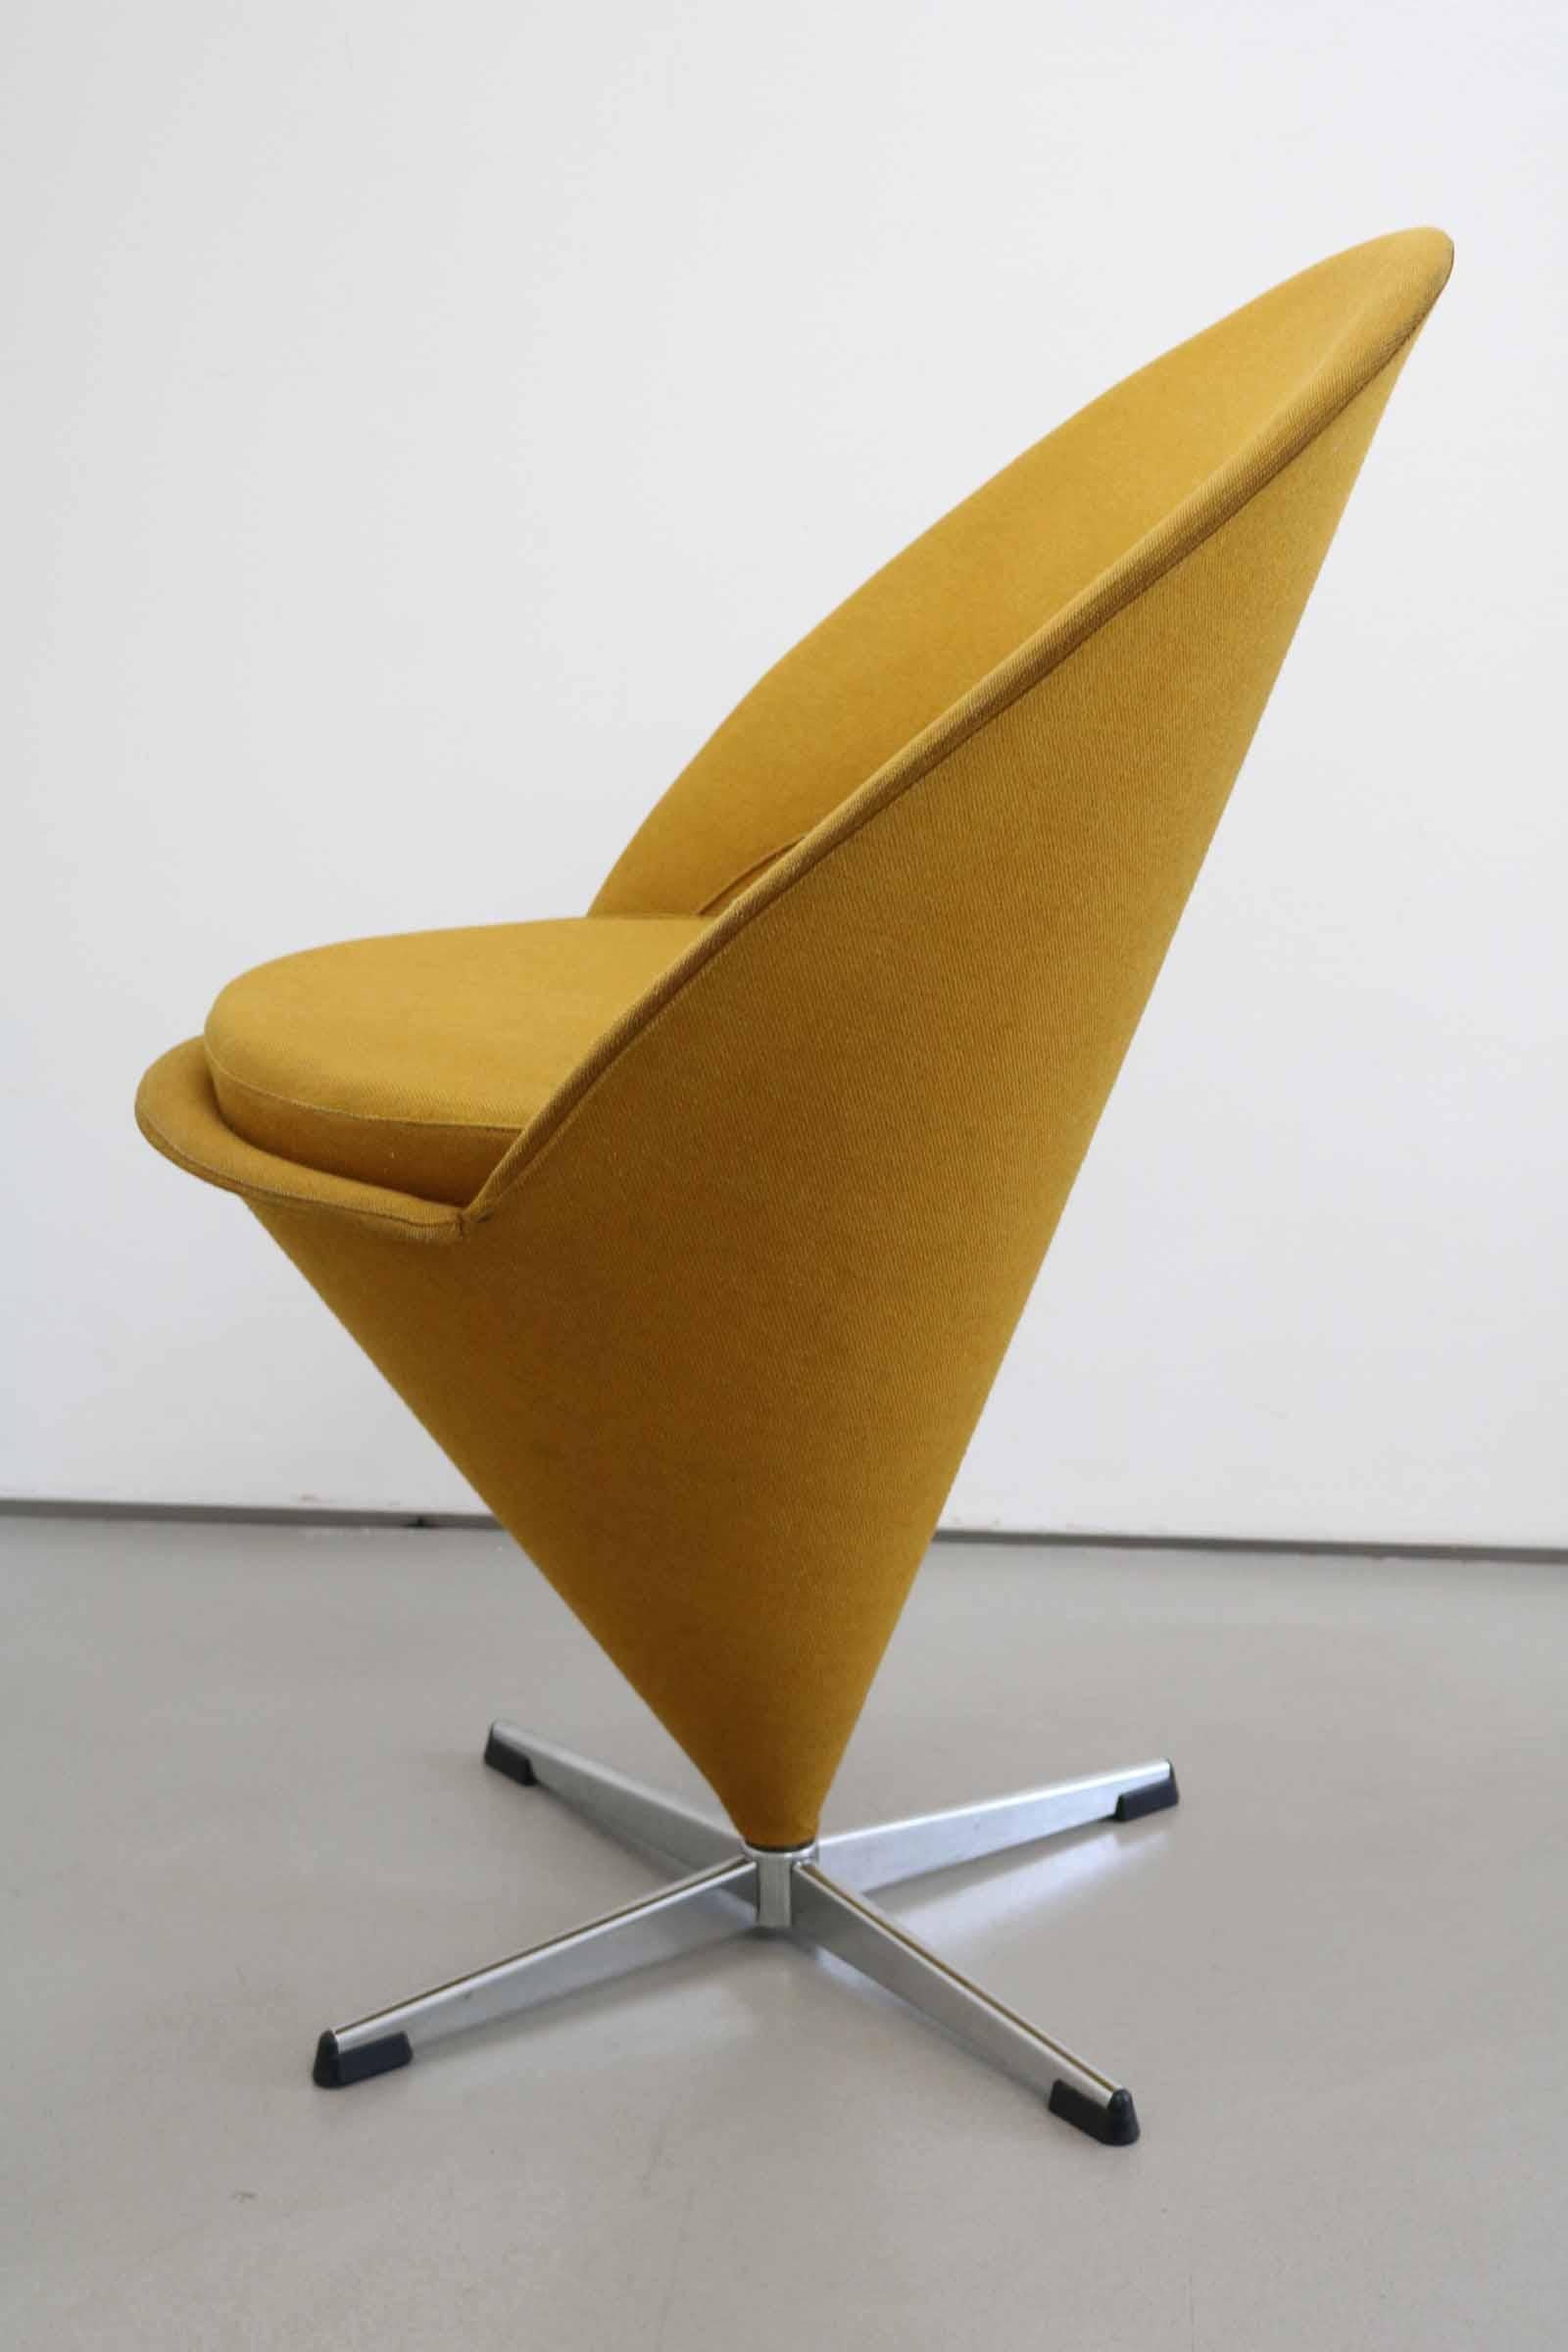 Danish Verner Panton Cone Chair in Original Fabric, Denmark, 1960s For Sale